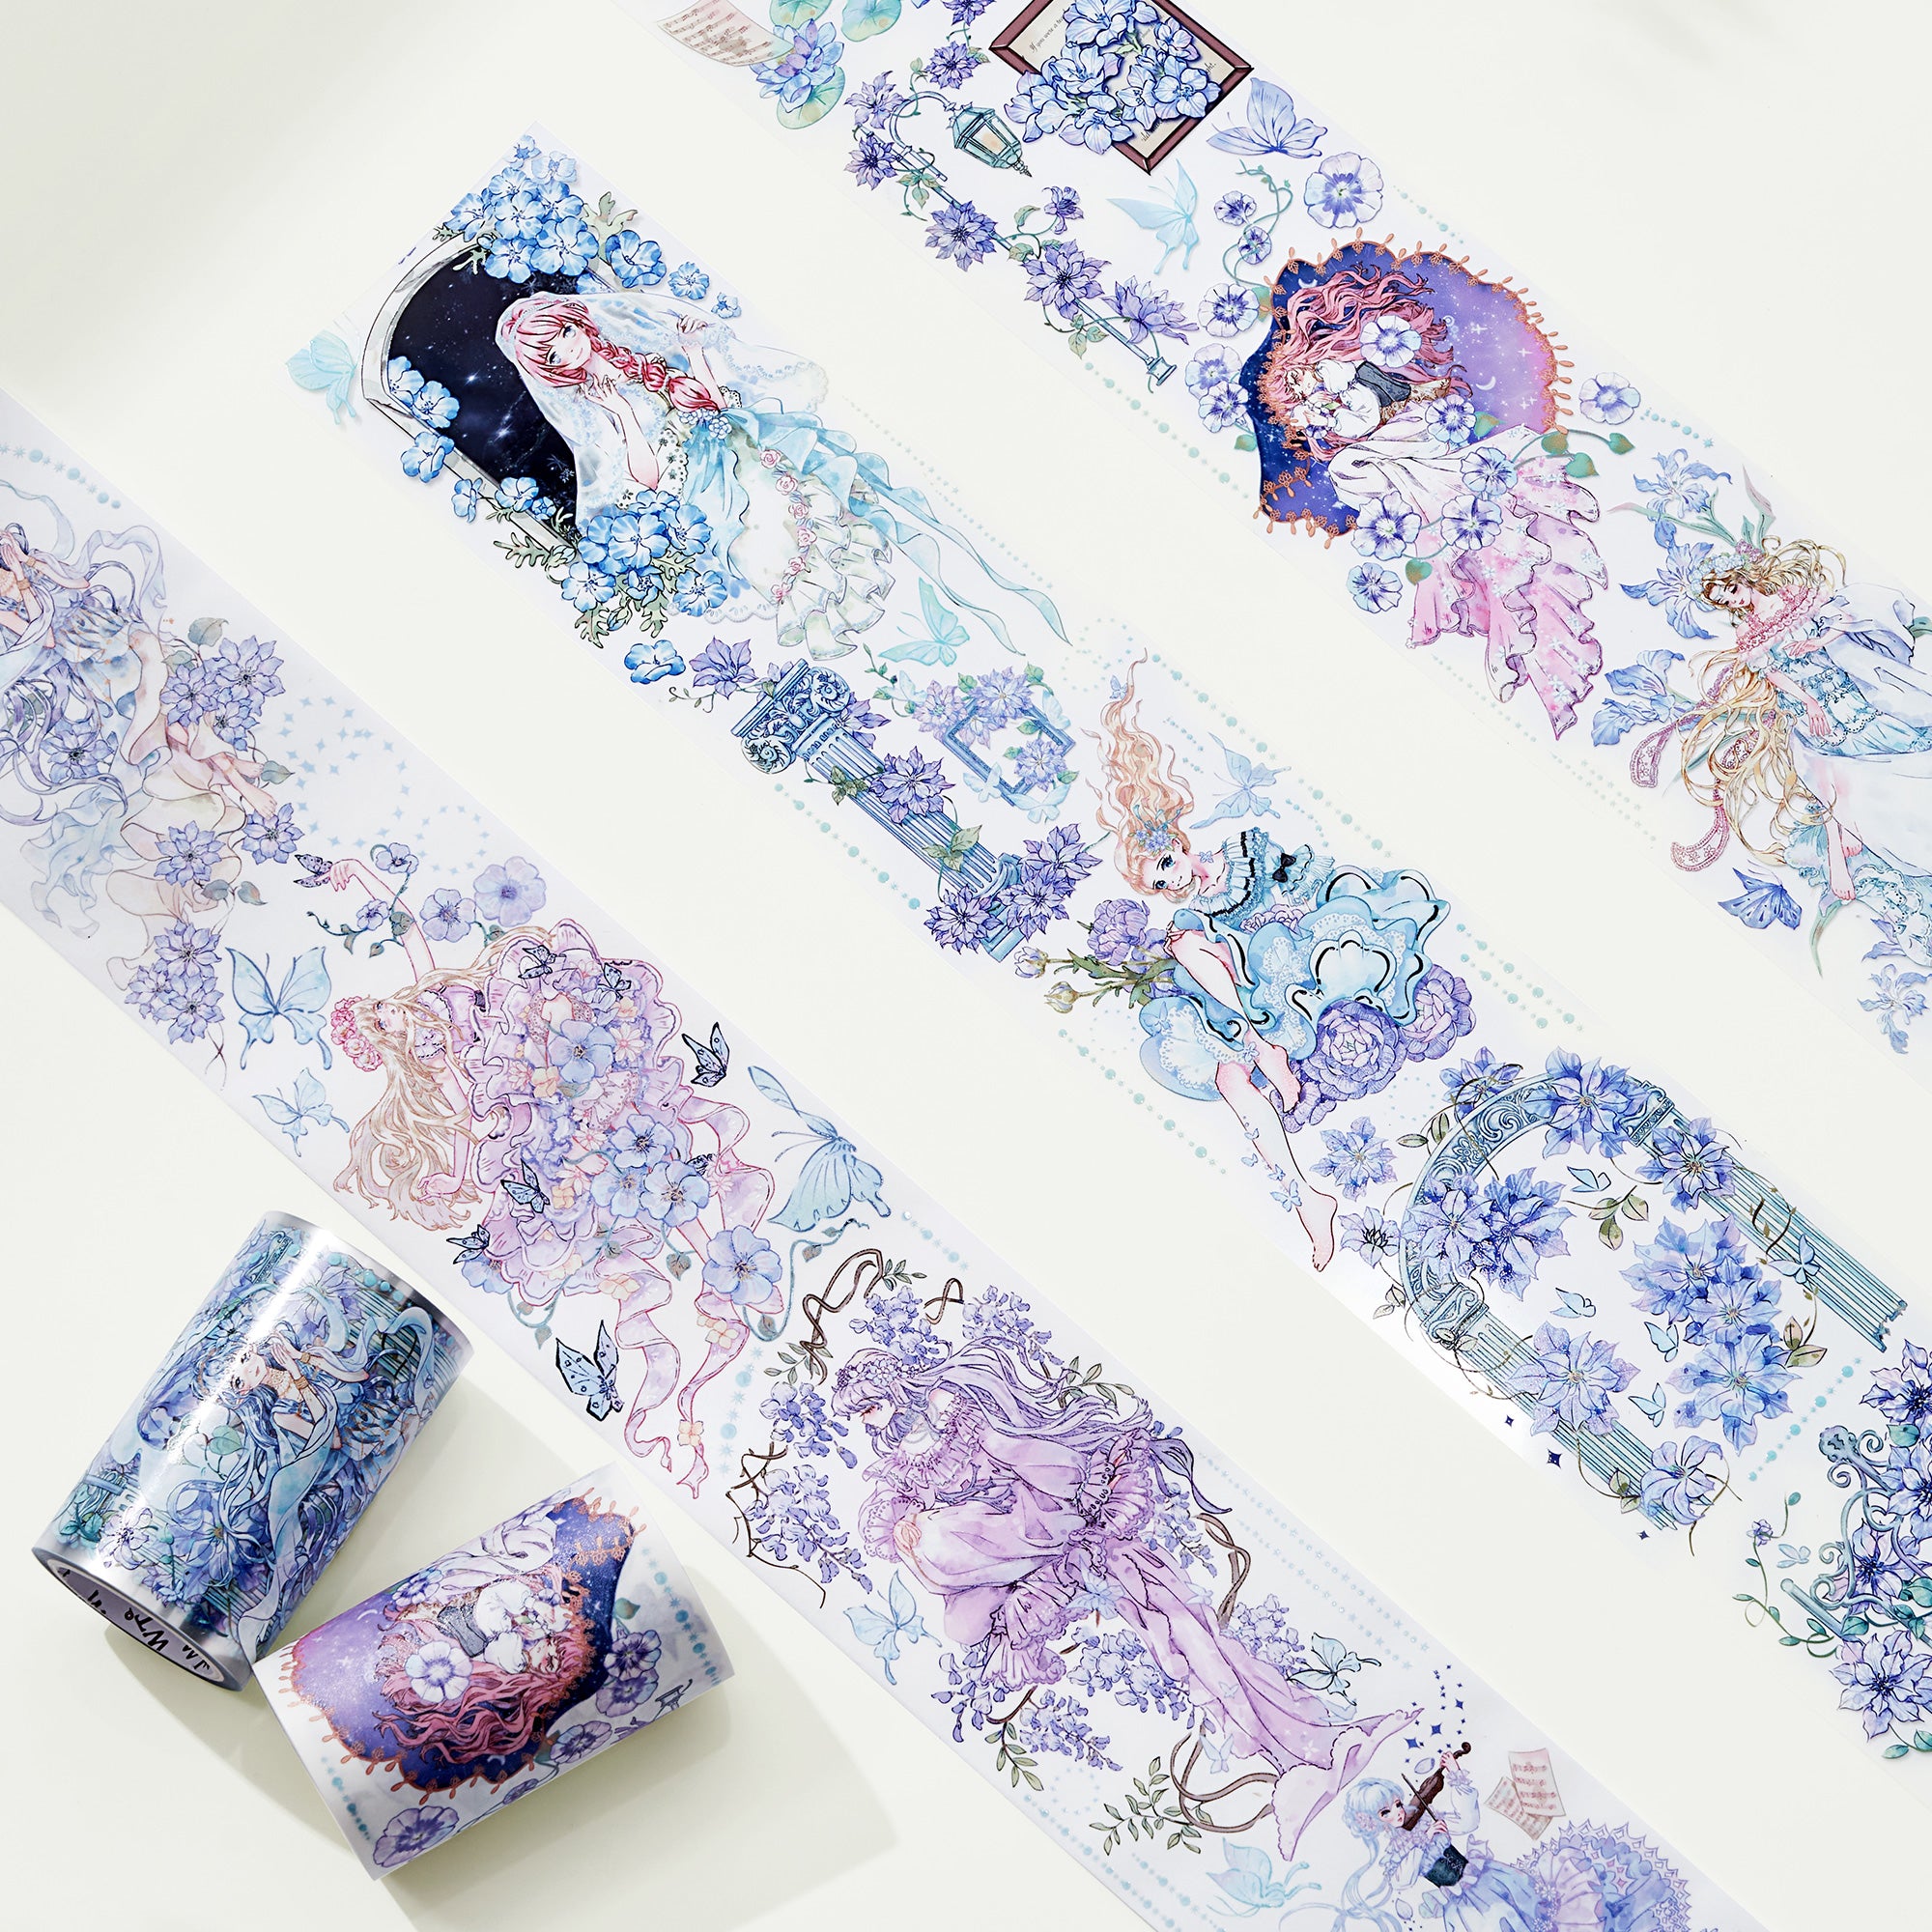 15 Gorgeous Washi Tape Crafts